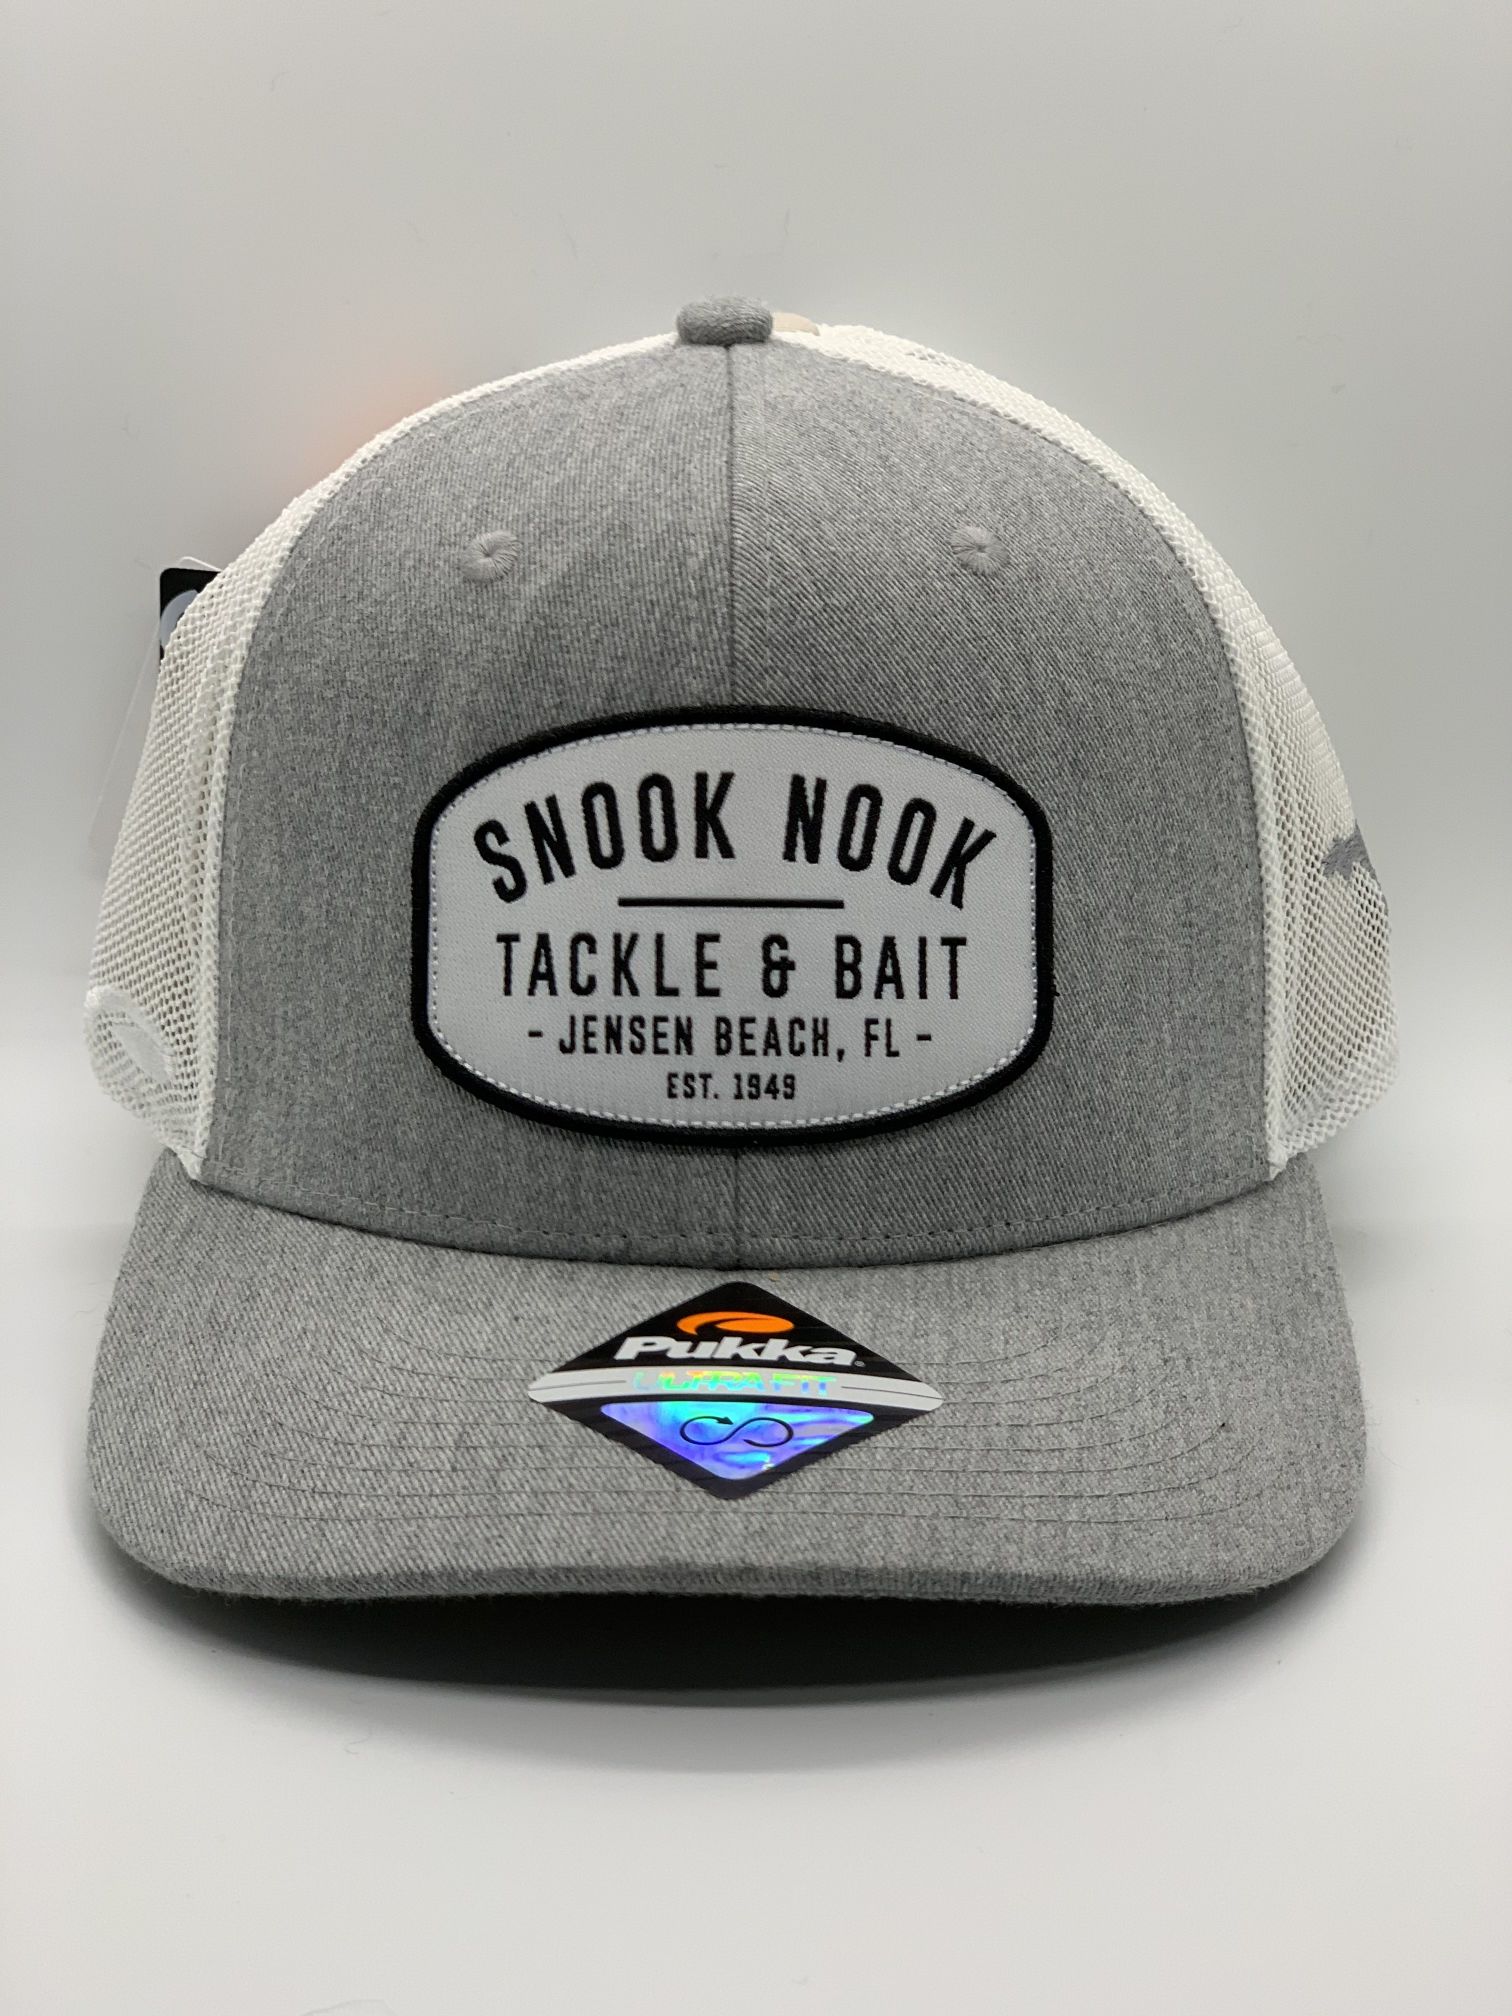 Snook Nook Tackle & Bait Mesh Snapback